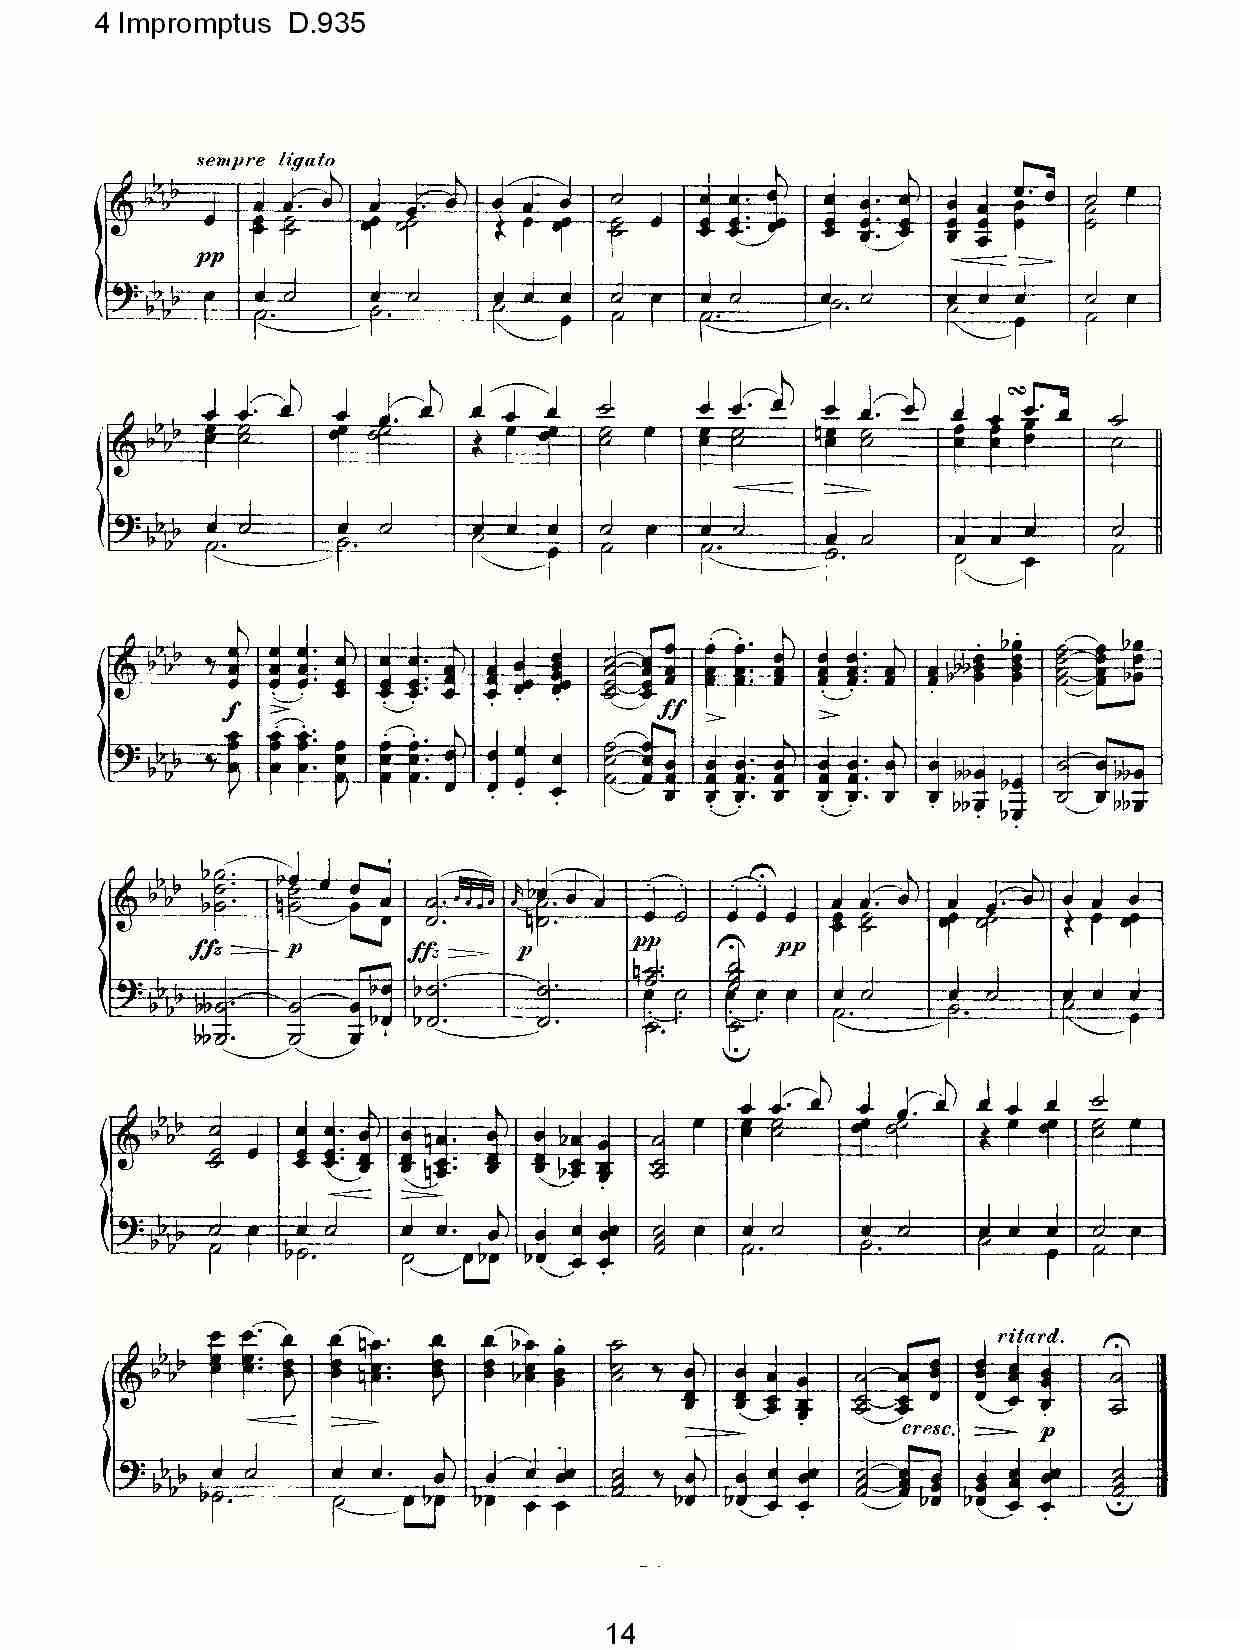 4 Impromptus D.935（4人即兴演奏D.935）钢琴曲谱（图14）